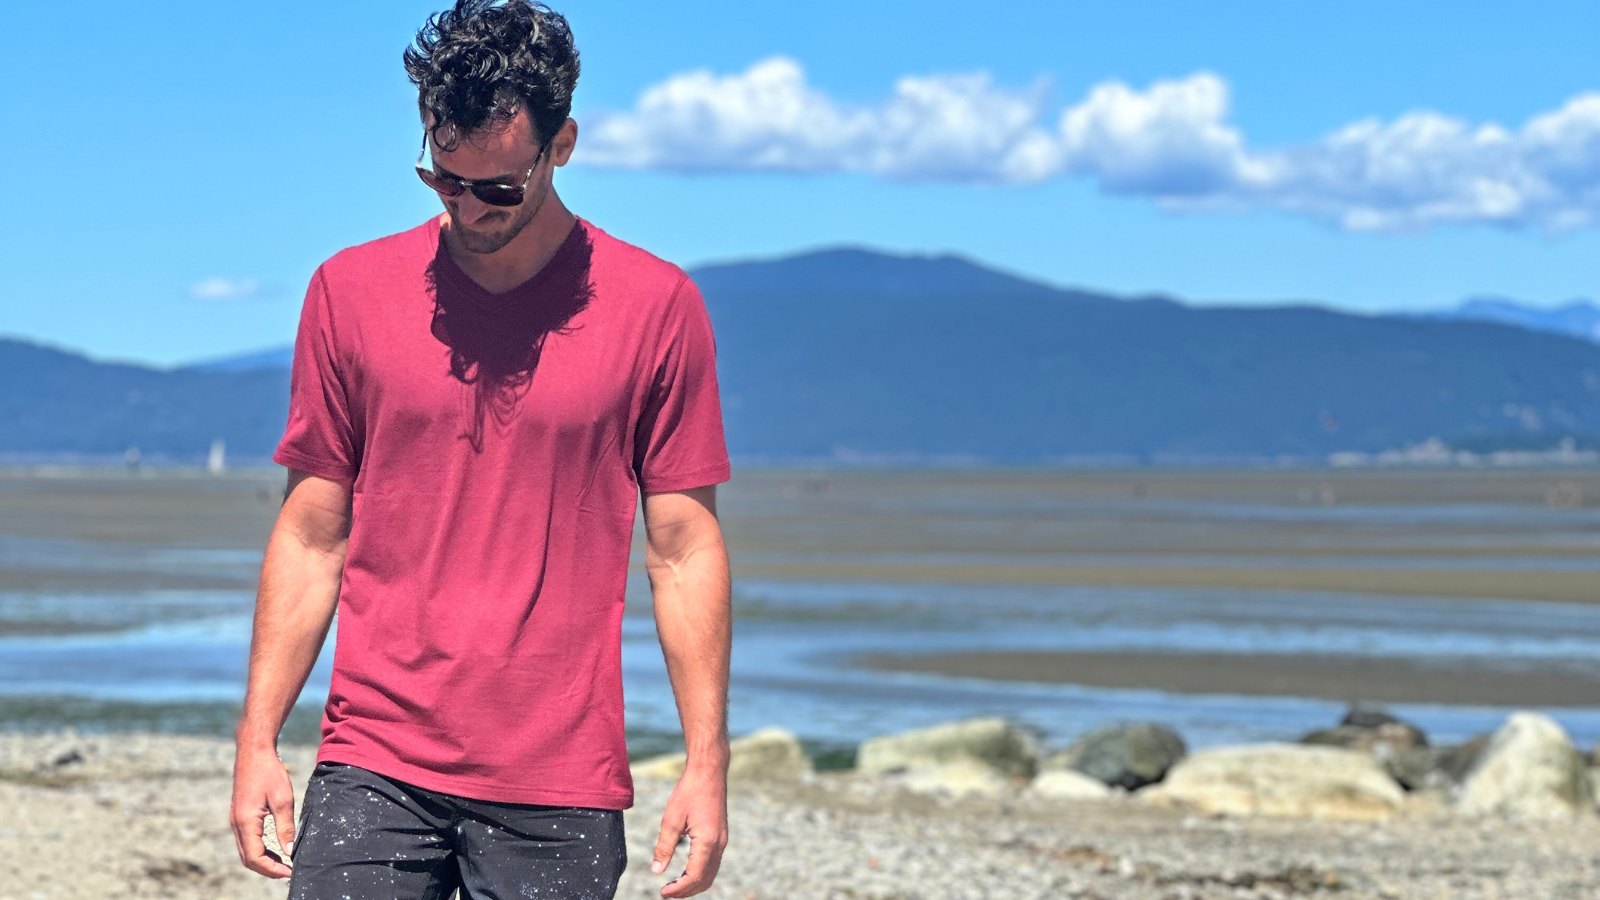 Tall guy walking on beach in red navas lab shirt